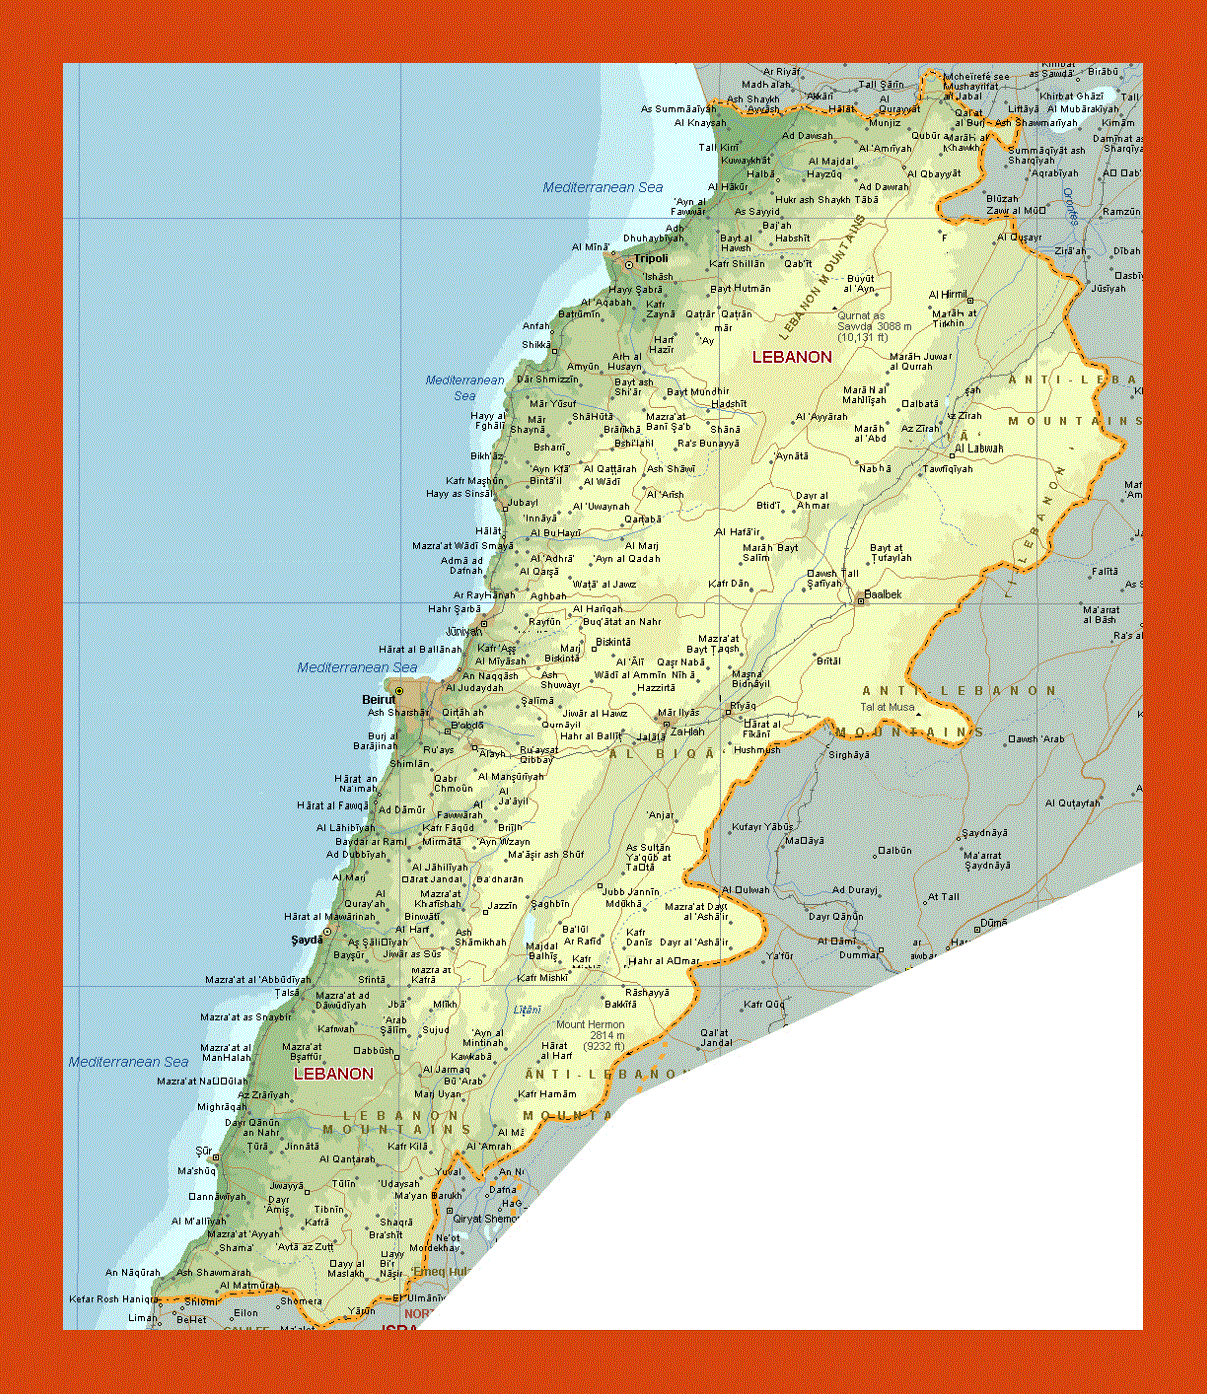 Elevation map of Lebanon